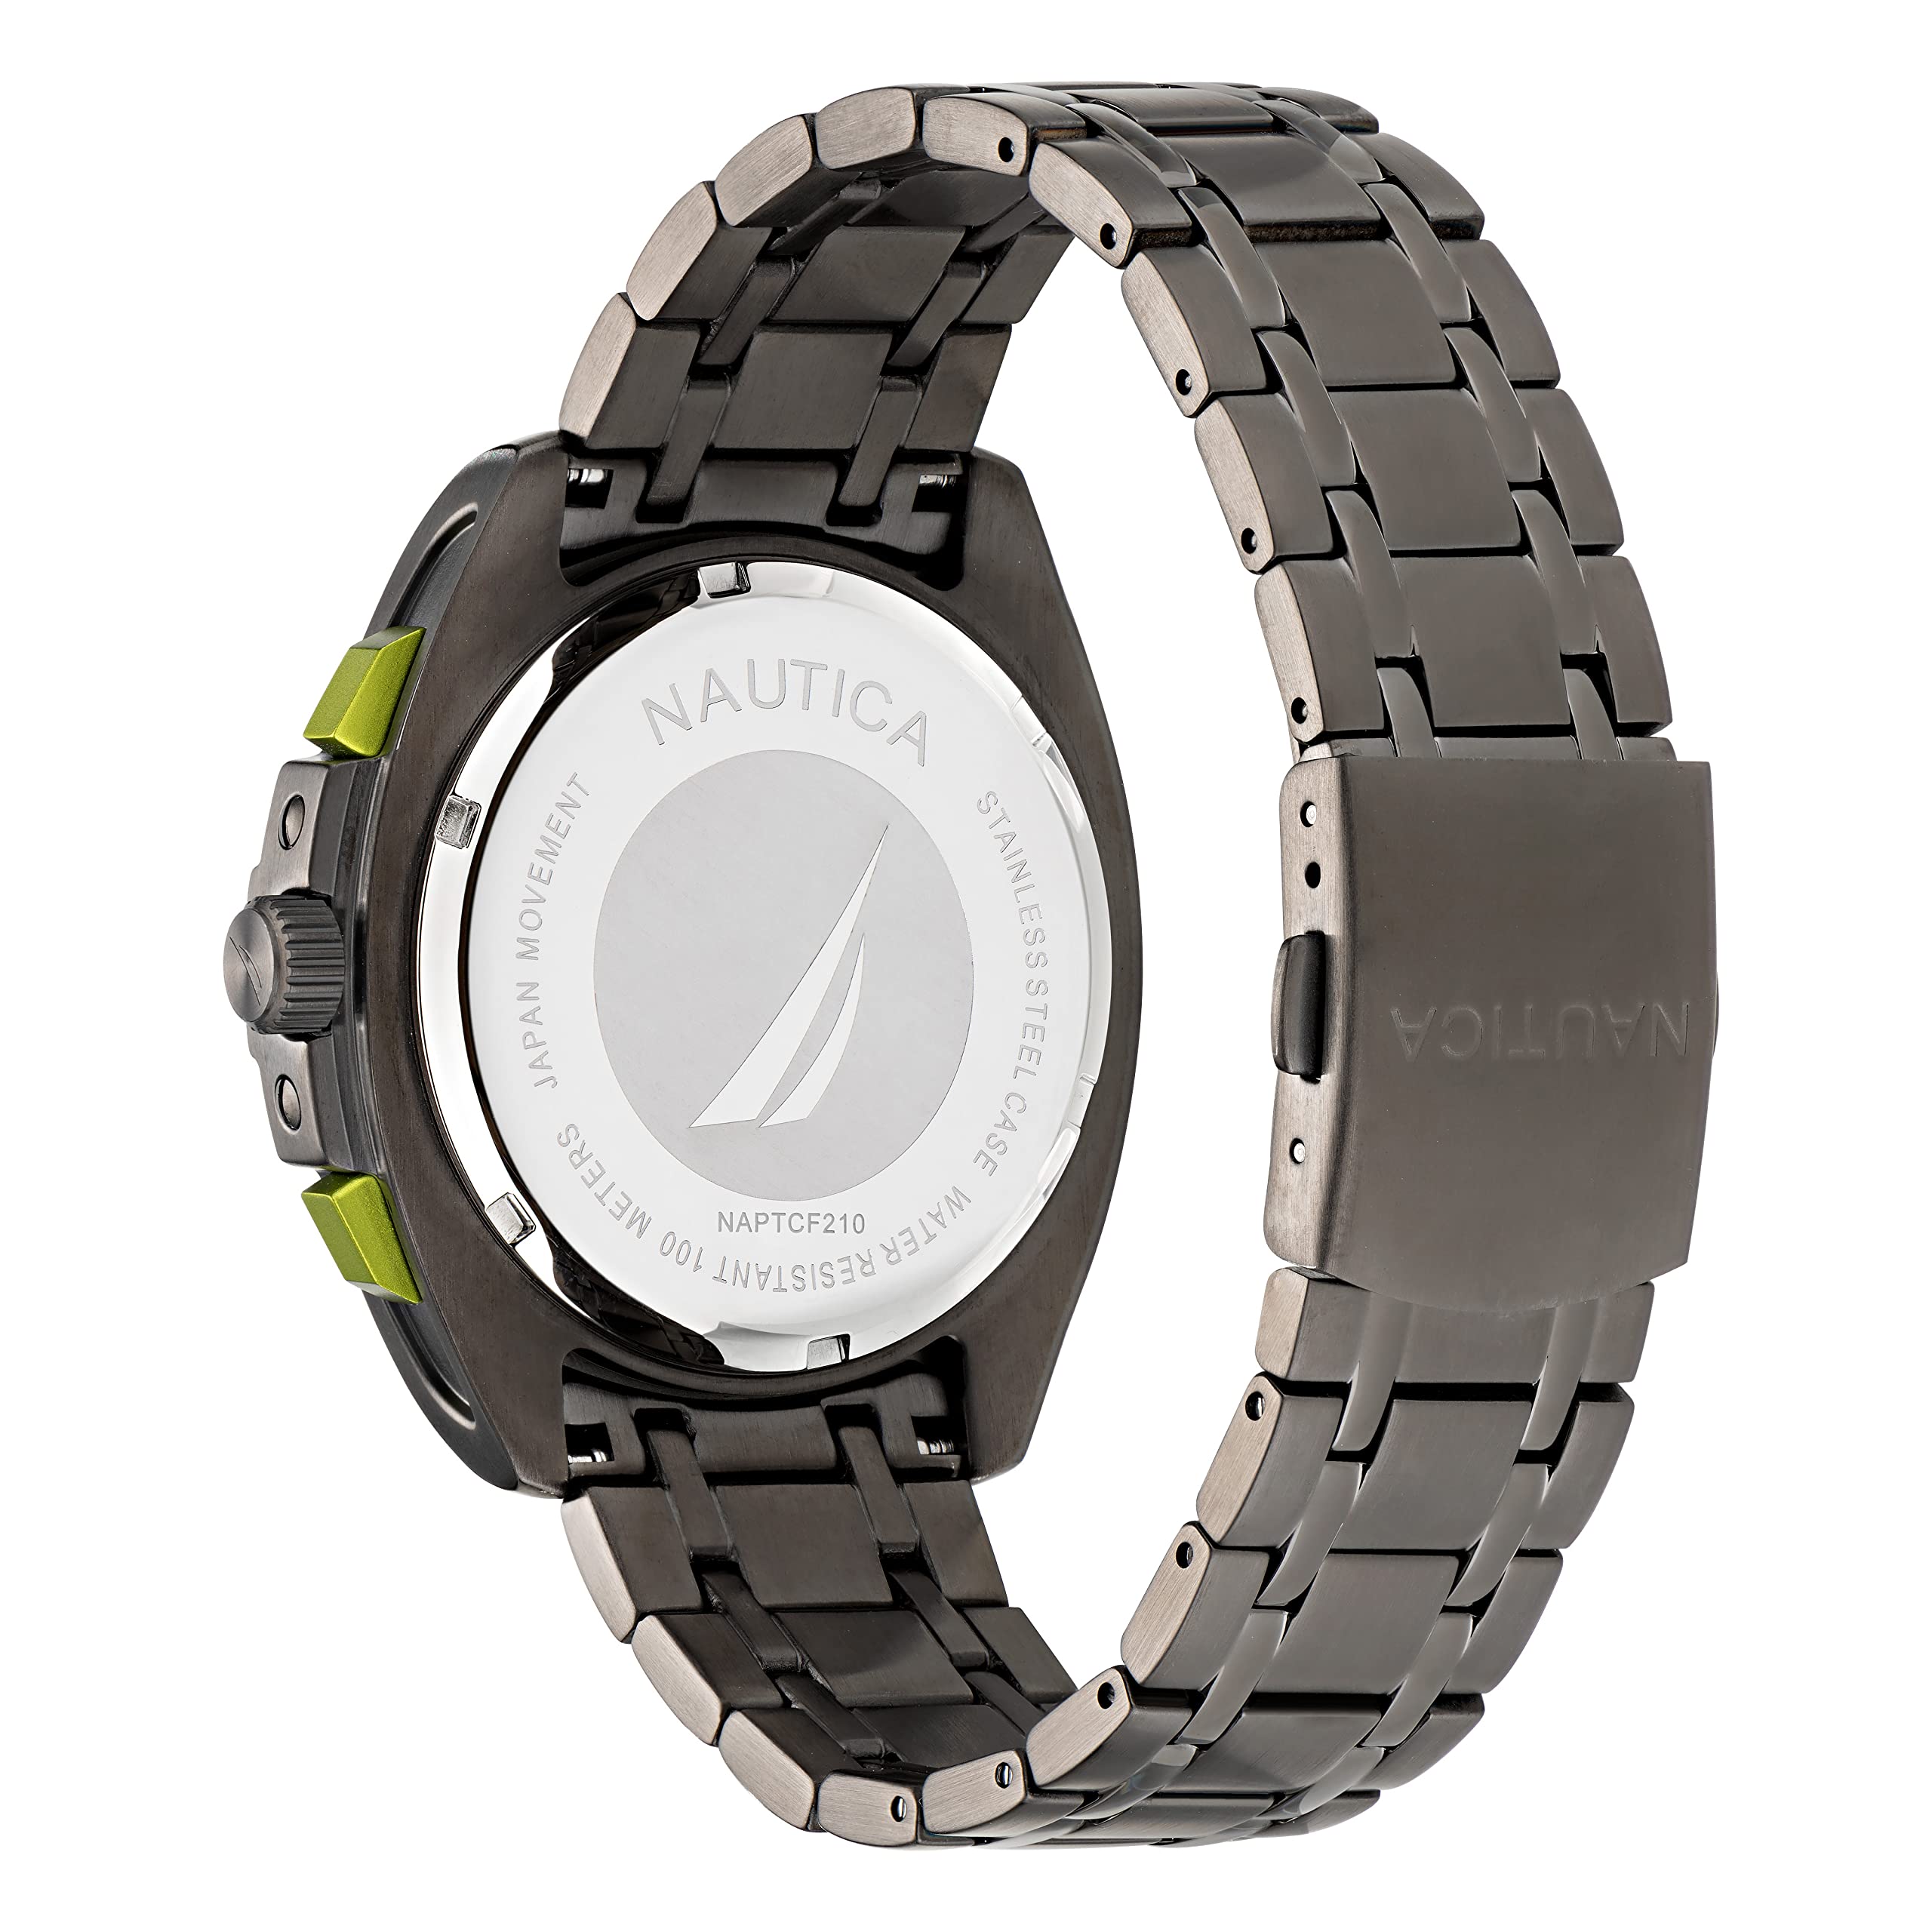 Nautica Men's Tin Can Bay Chrono IP Gunmetal Stainless Steel Bracelet Watch (Model: NAPTCF210)